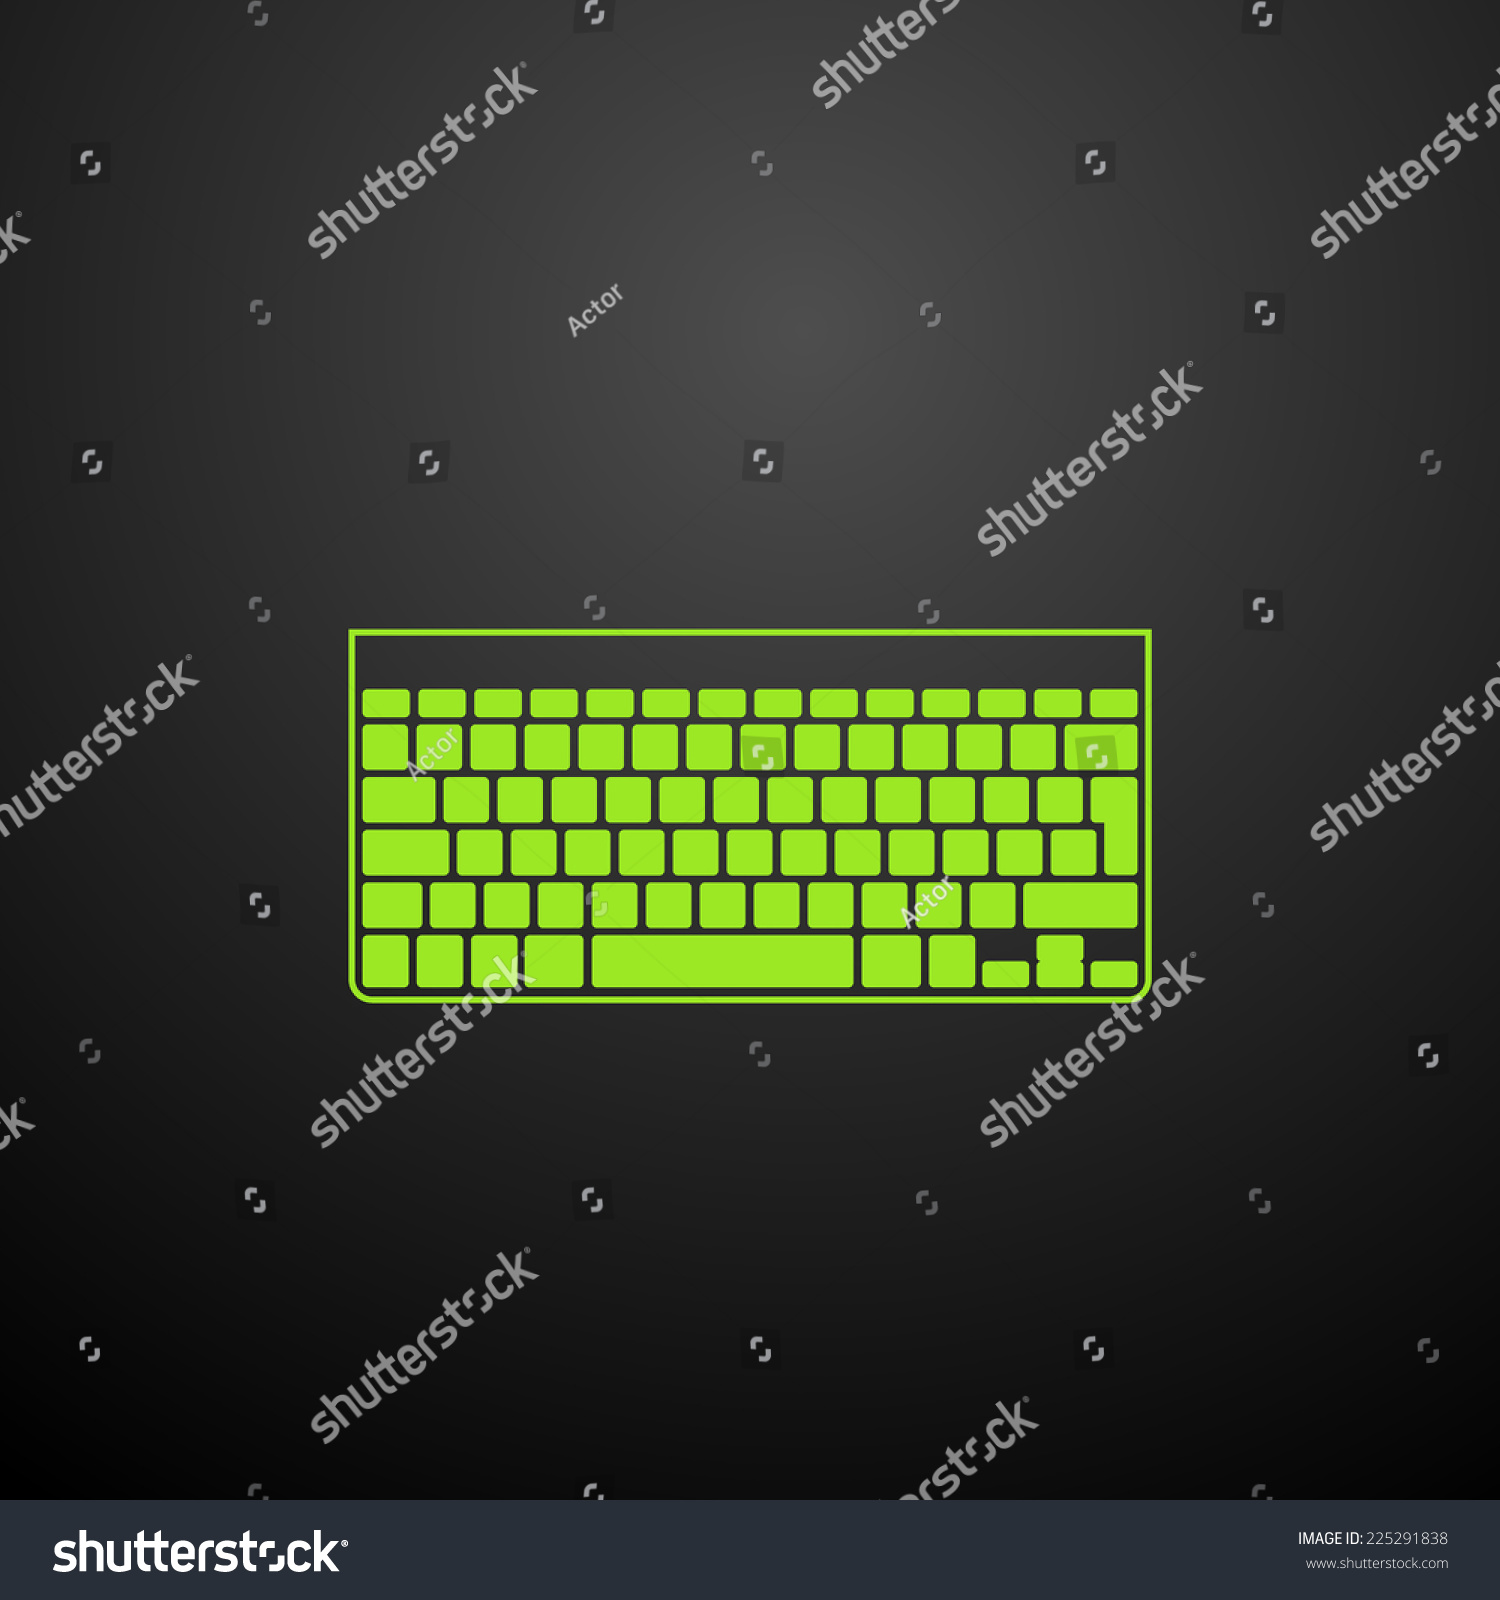 computer keyboard clipart eps - photo #27